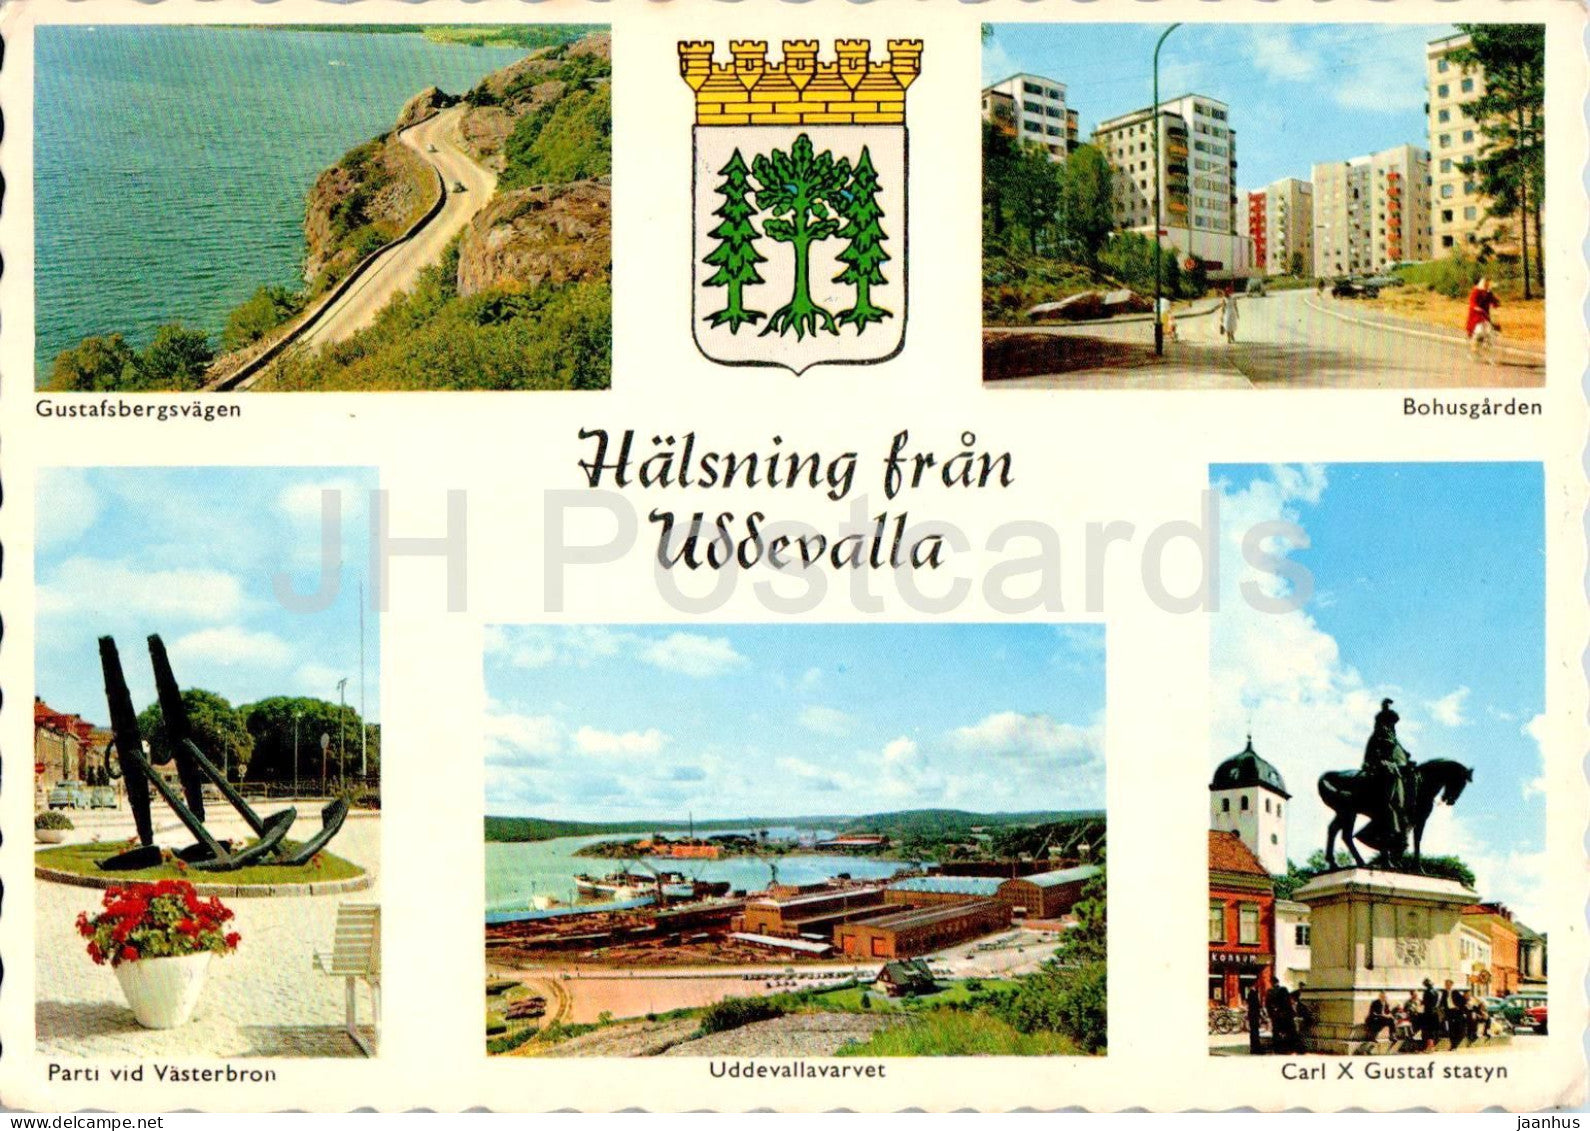 Halsning fran Uddevalla - Bohusgarden - Uddevallavarvet - Carl X Gustav statyn - multiview - 228 - 1963 - Sweden - used - JH Postcards